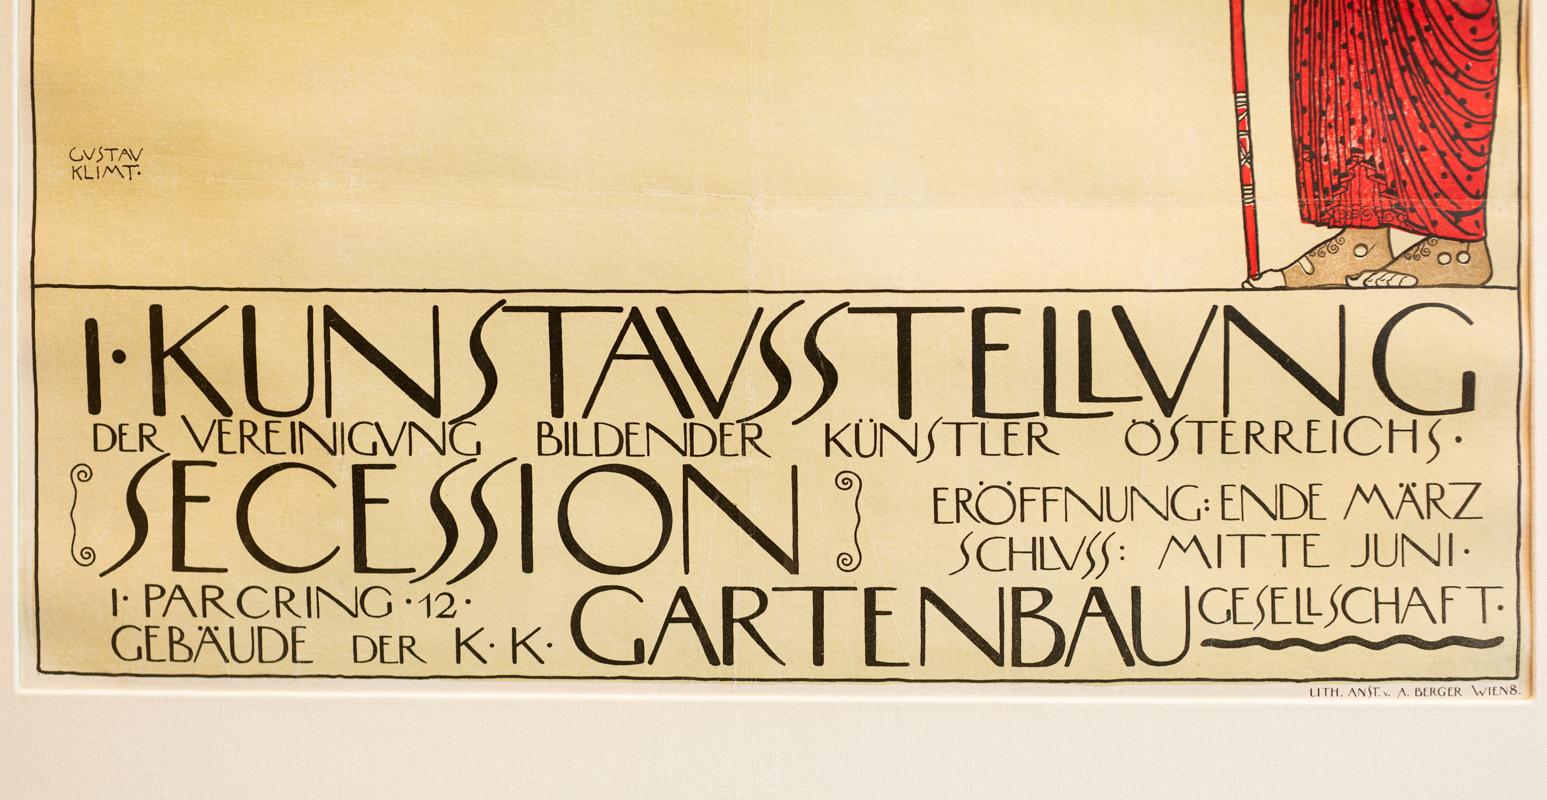 Gustav Klimt Poster for the 1st Vienna Secession 2